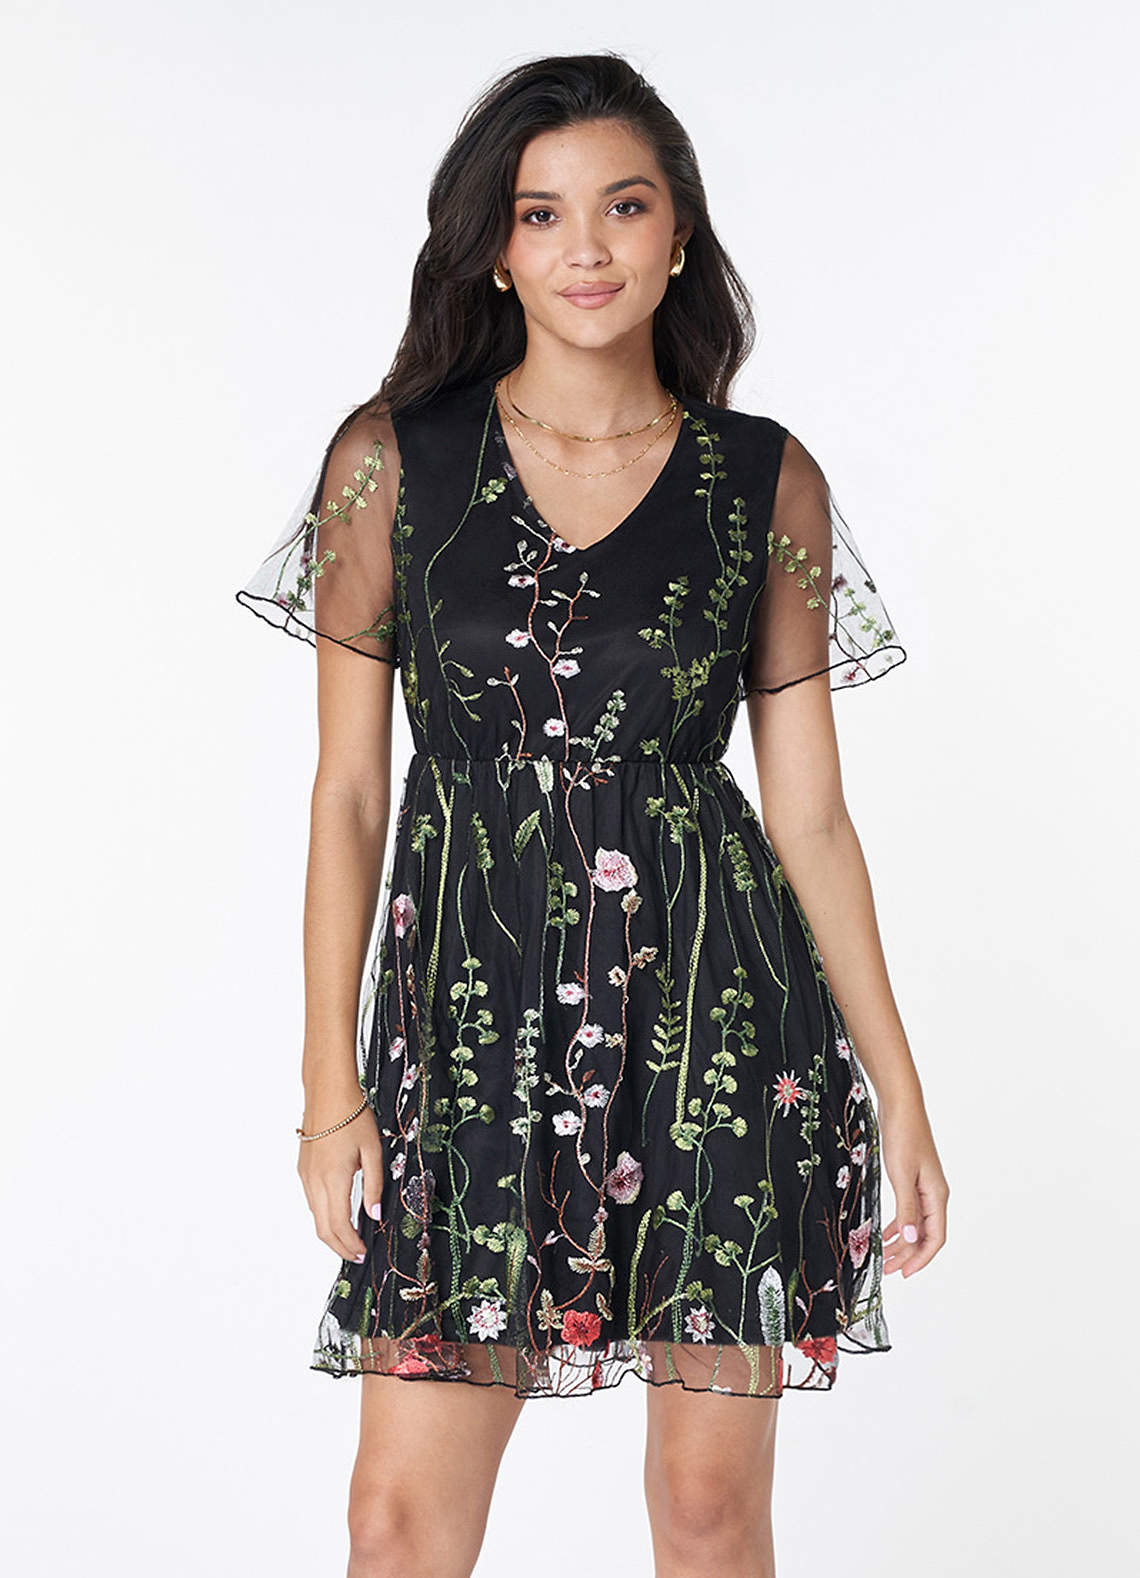 Darling Romance Black Floral Embroidery Mini Dress image1